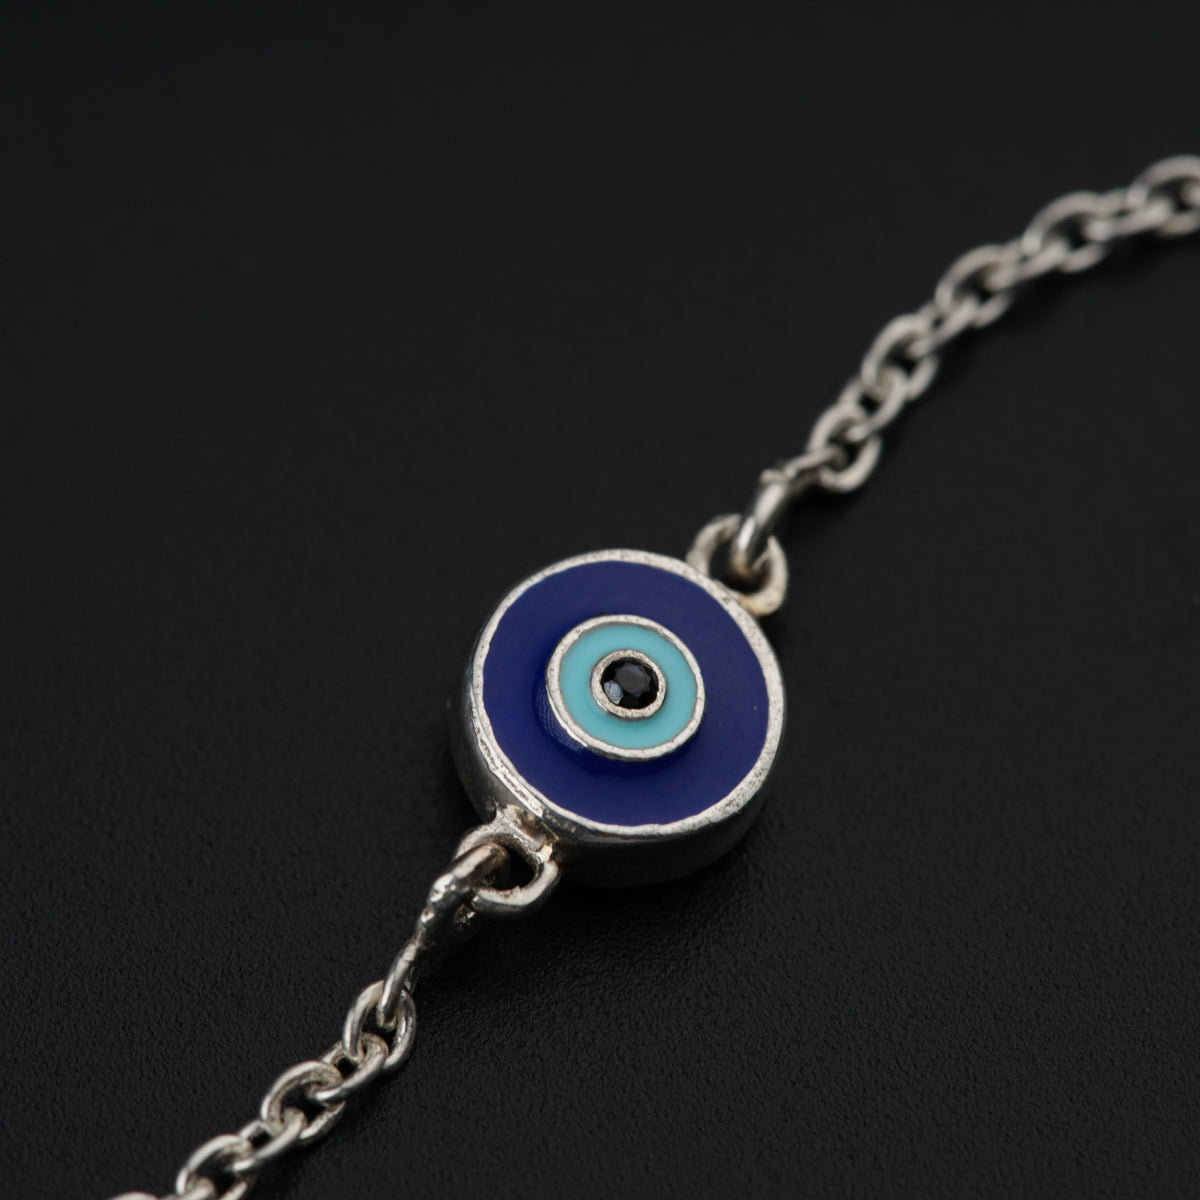 a blue evil eye charm on a silver chain